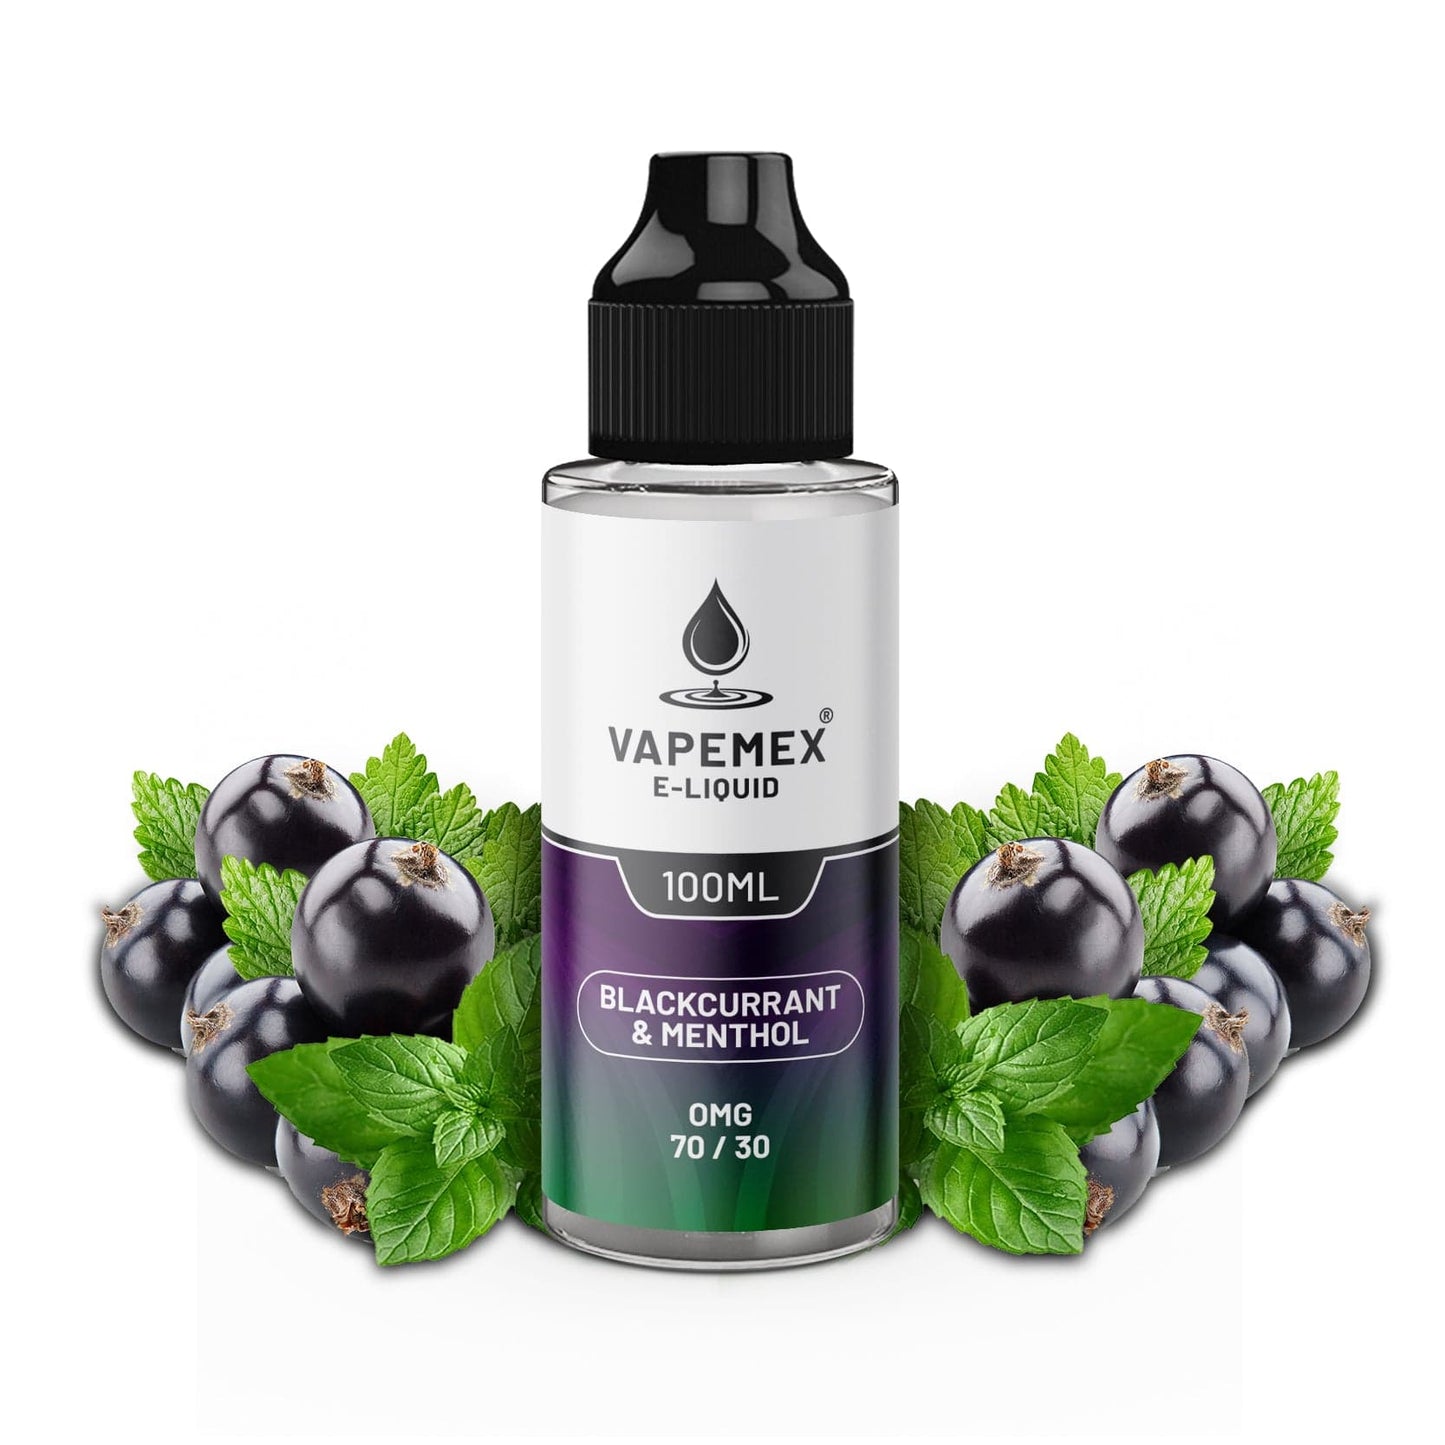 Blackcurrant & Menthol by VAPEMEX 100ml Shortfill E-Liquid